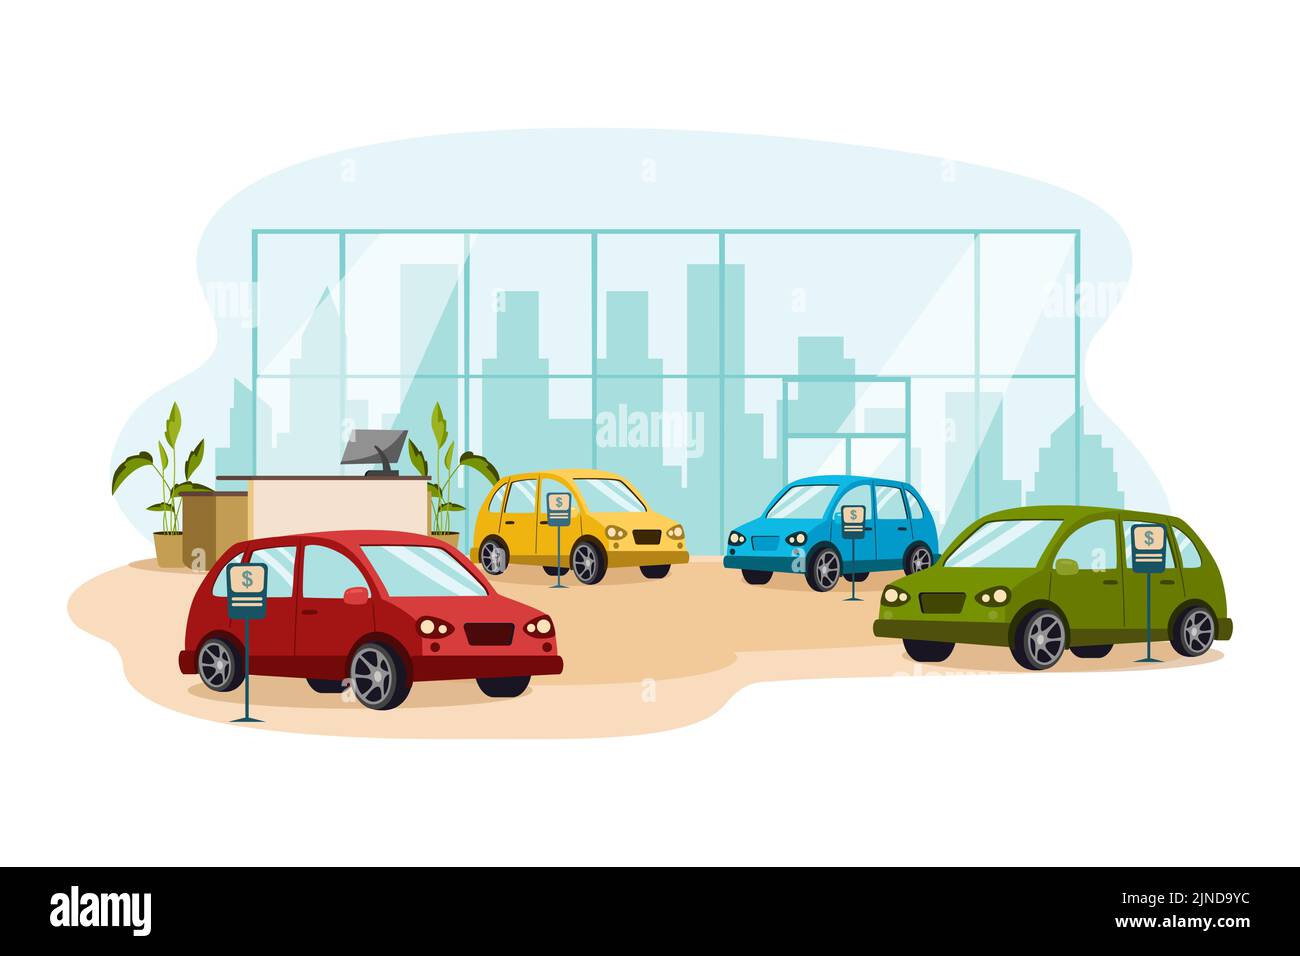 Car Dealership Illustration concept. Flat illustration isolated on white background Stock Vector